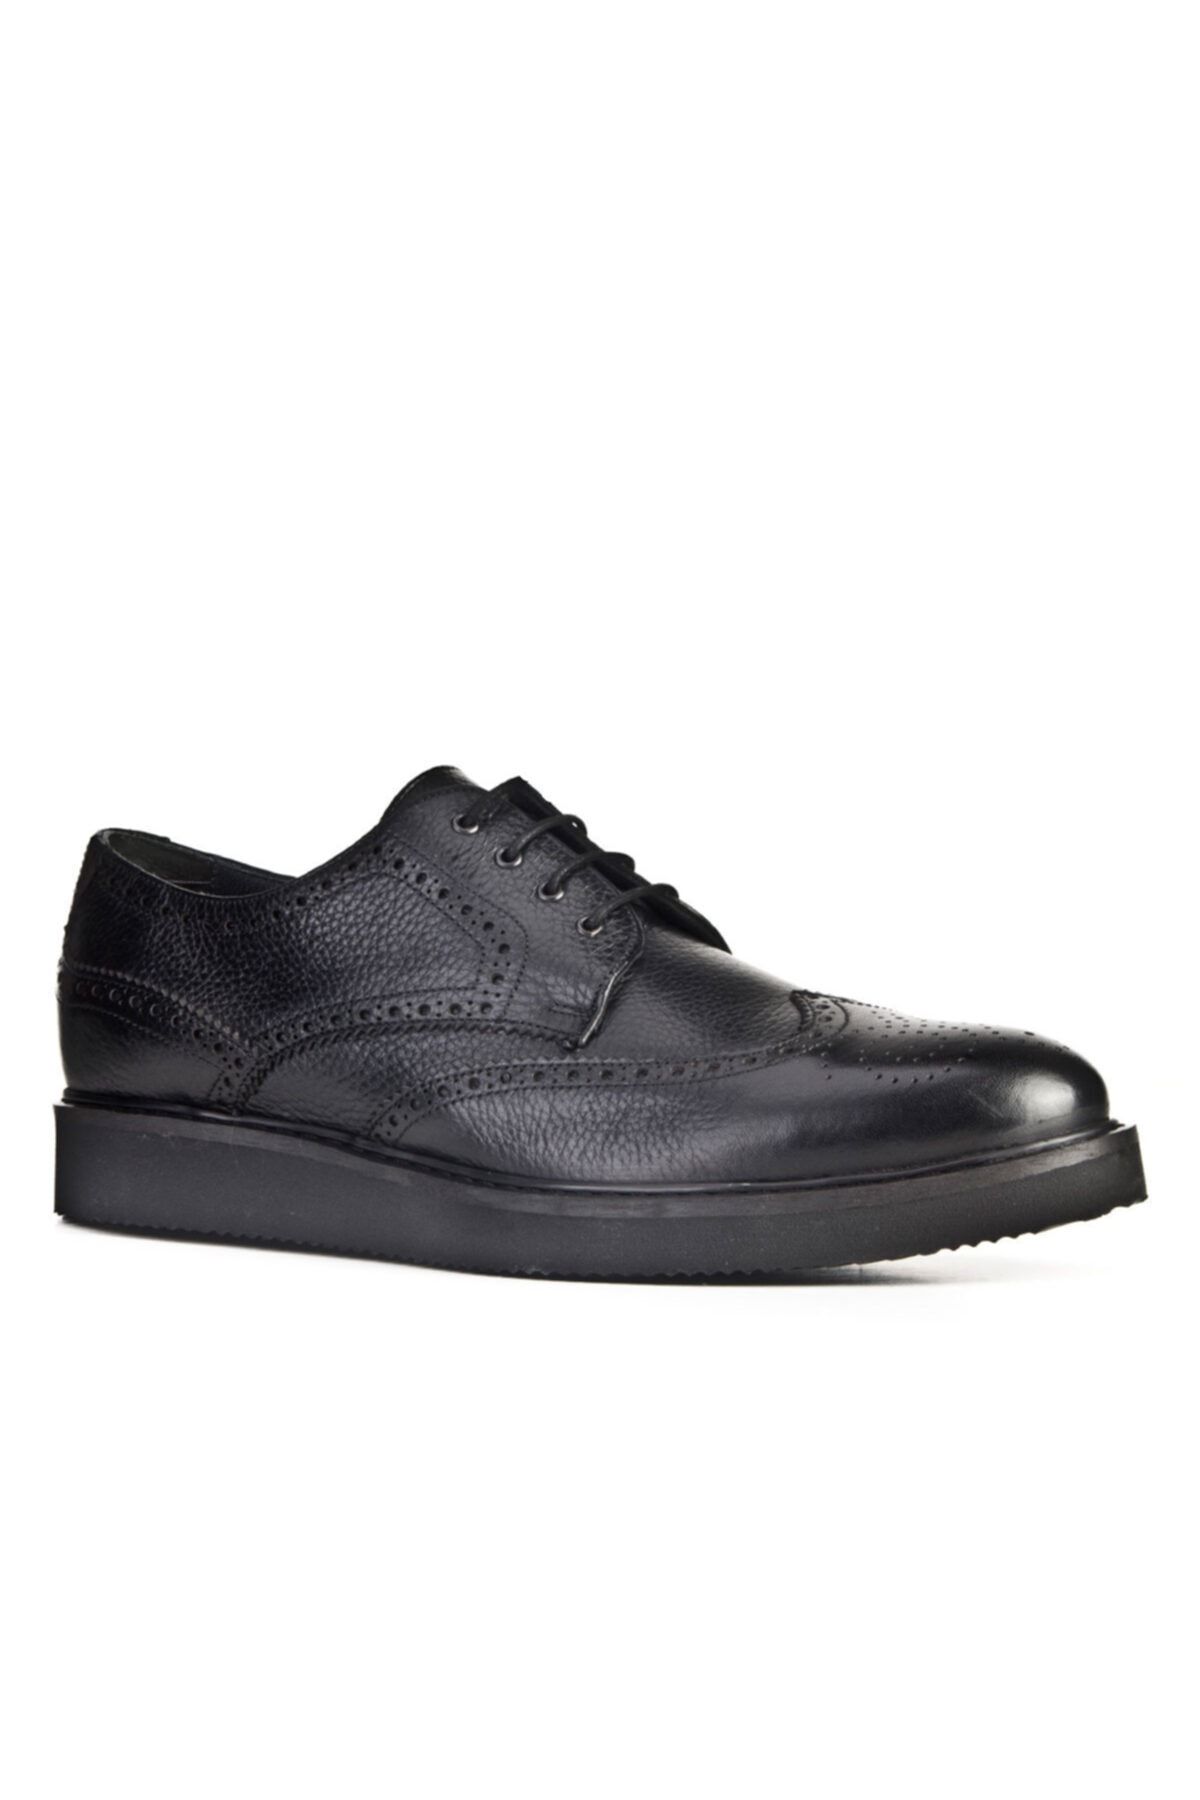 Cabani Oxford - Erkek Ayakkabı Siyah Nata Deri